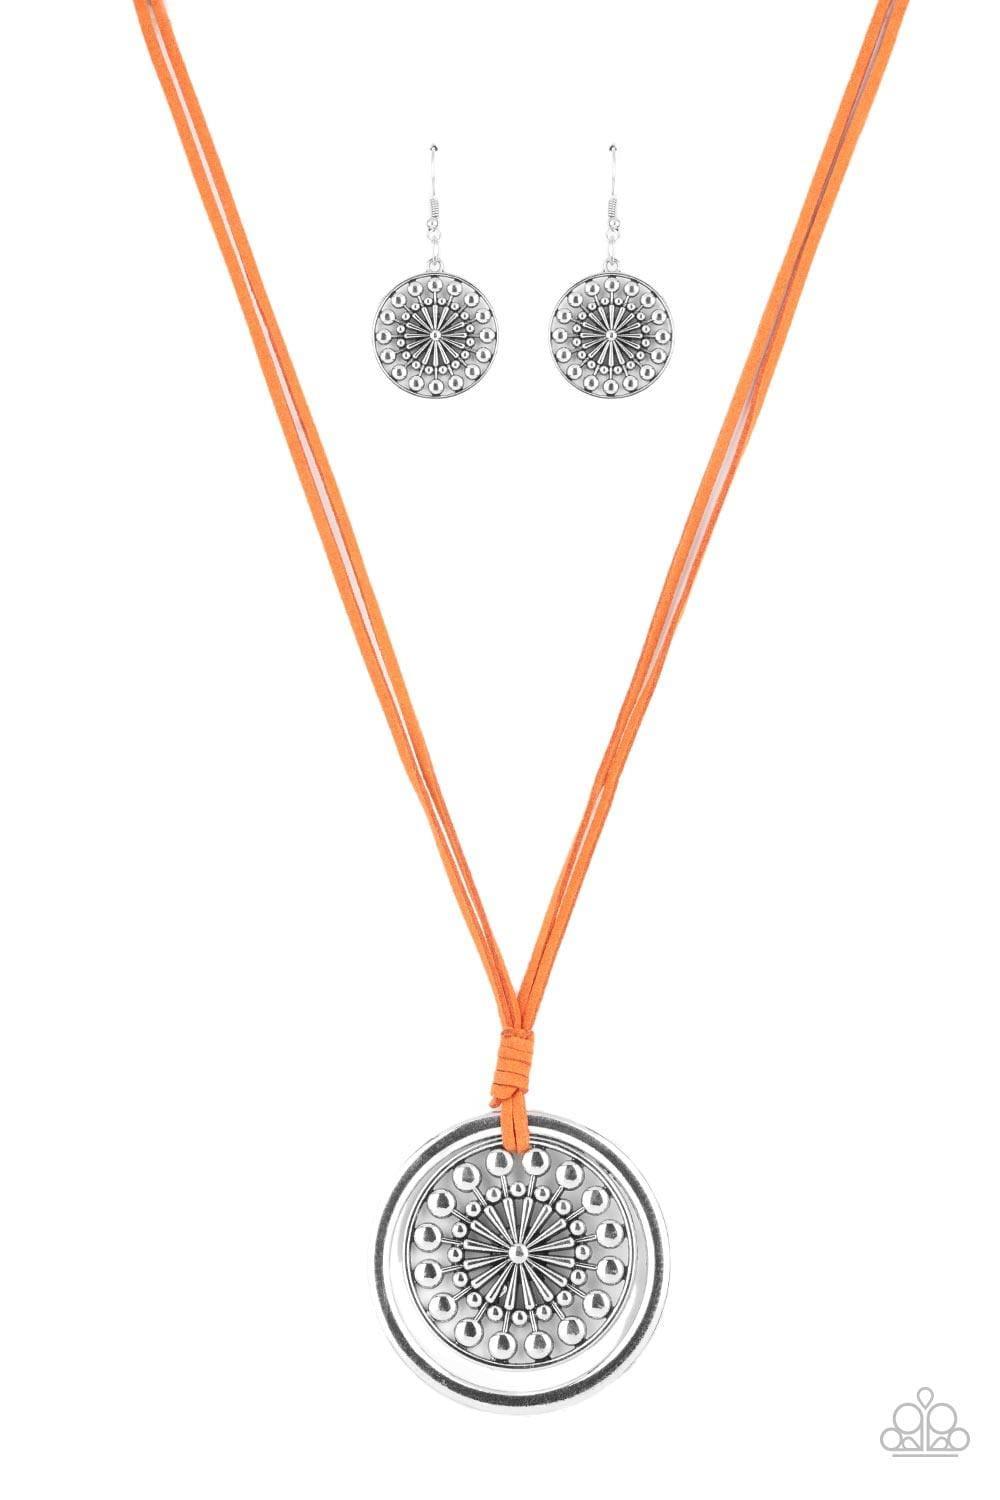 Paparazzi Accessories - One Mandala Show - Orange Necklace - Bling by JessieK